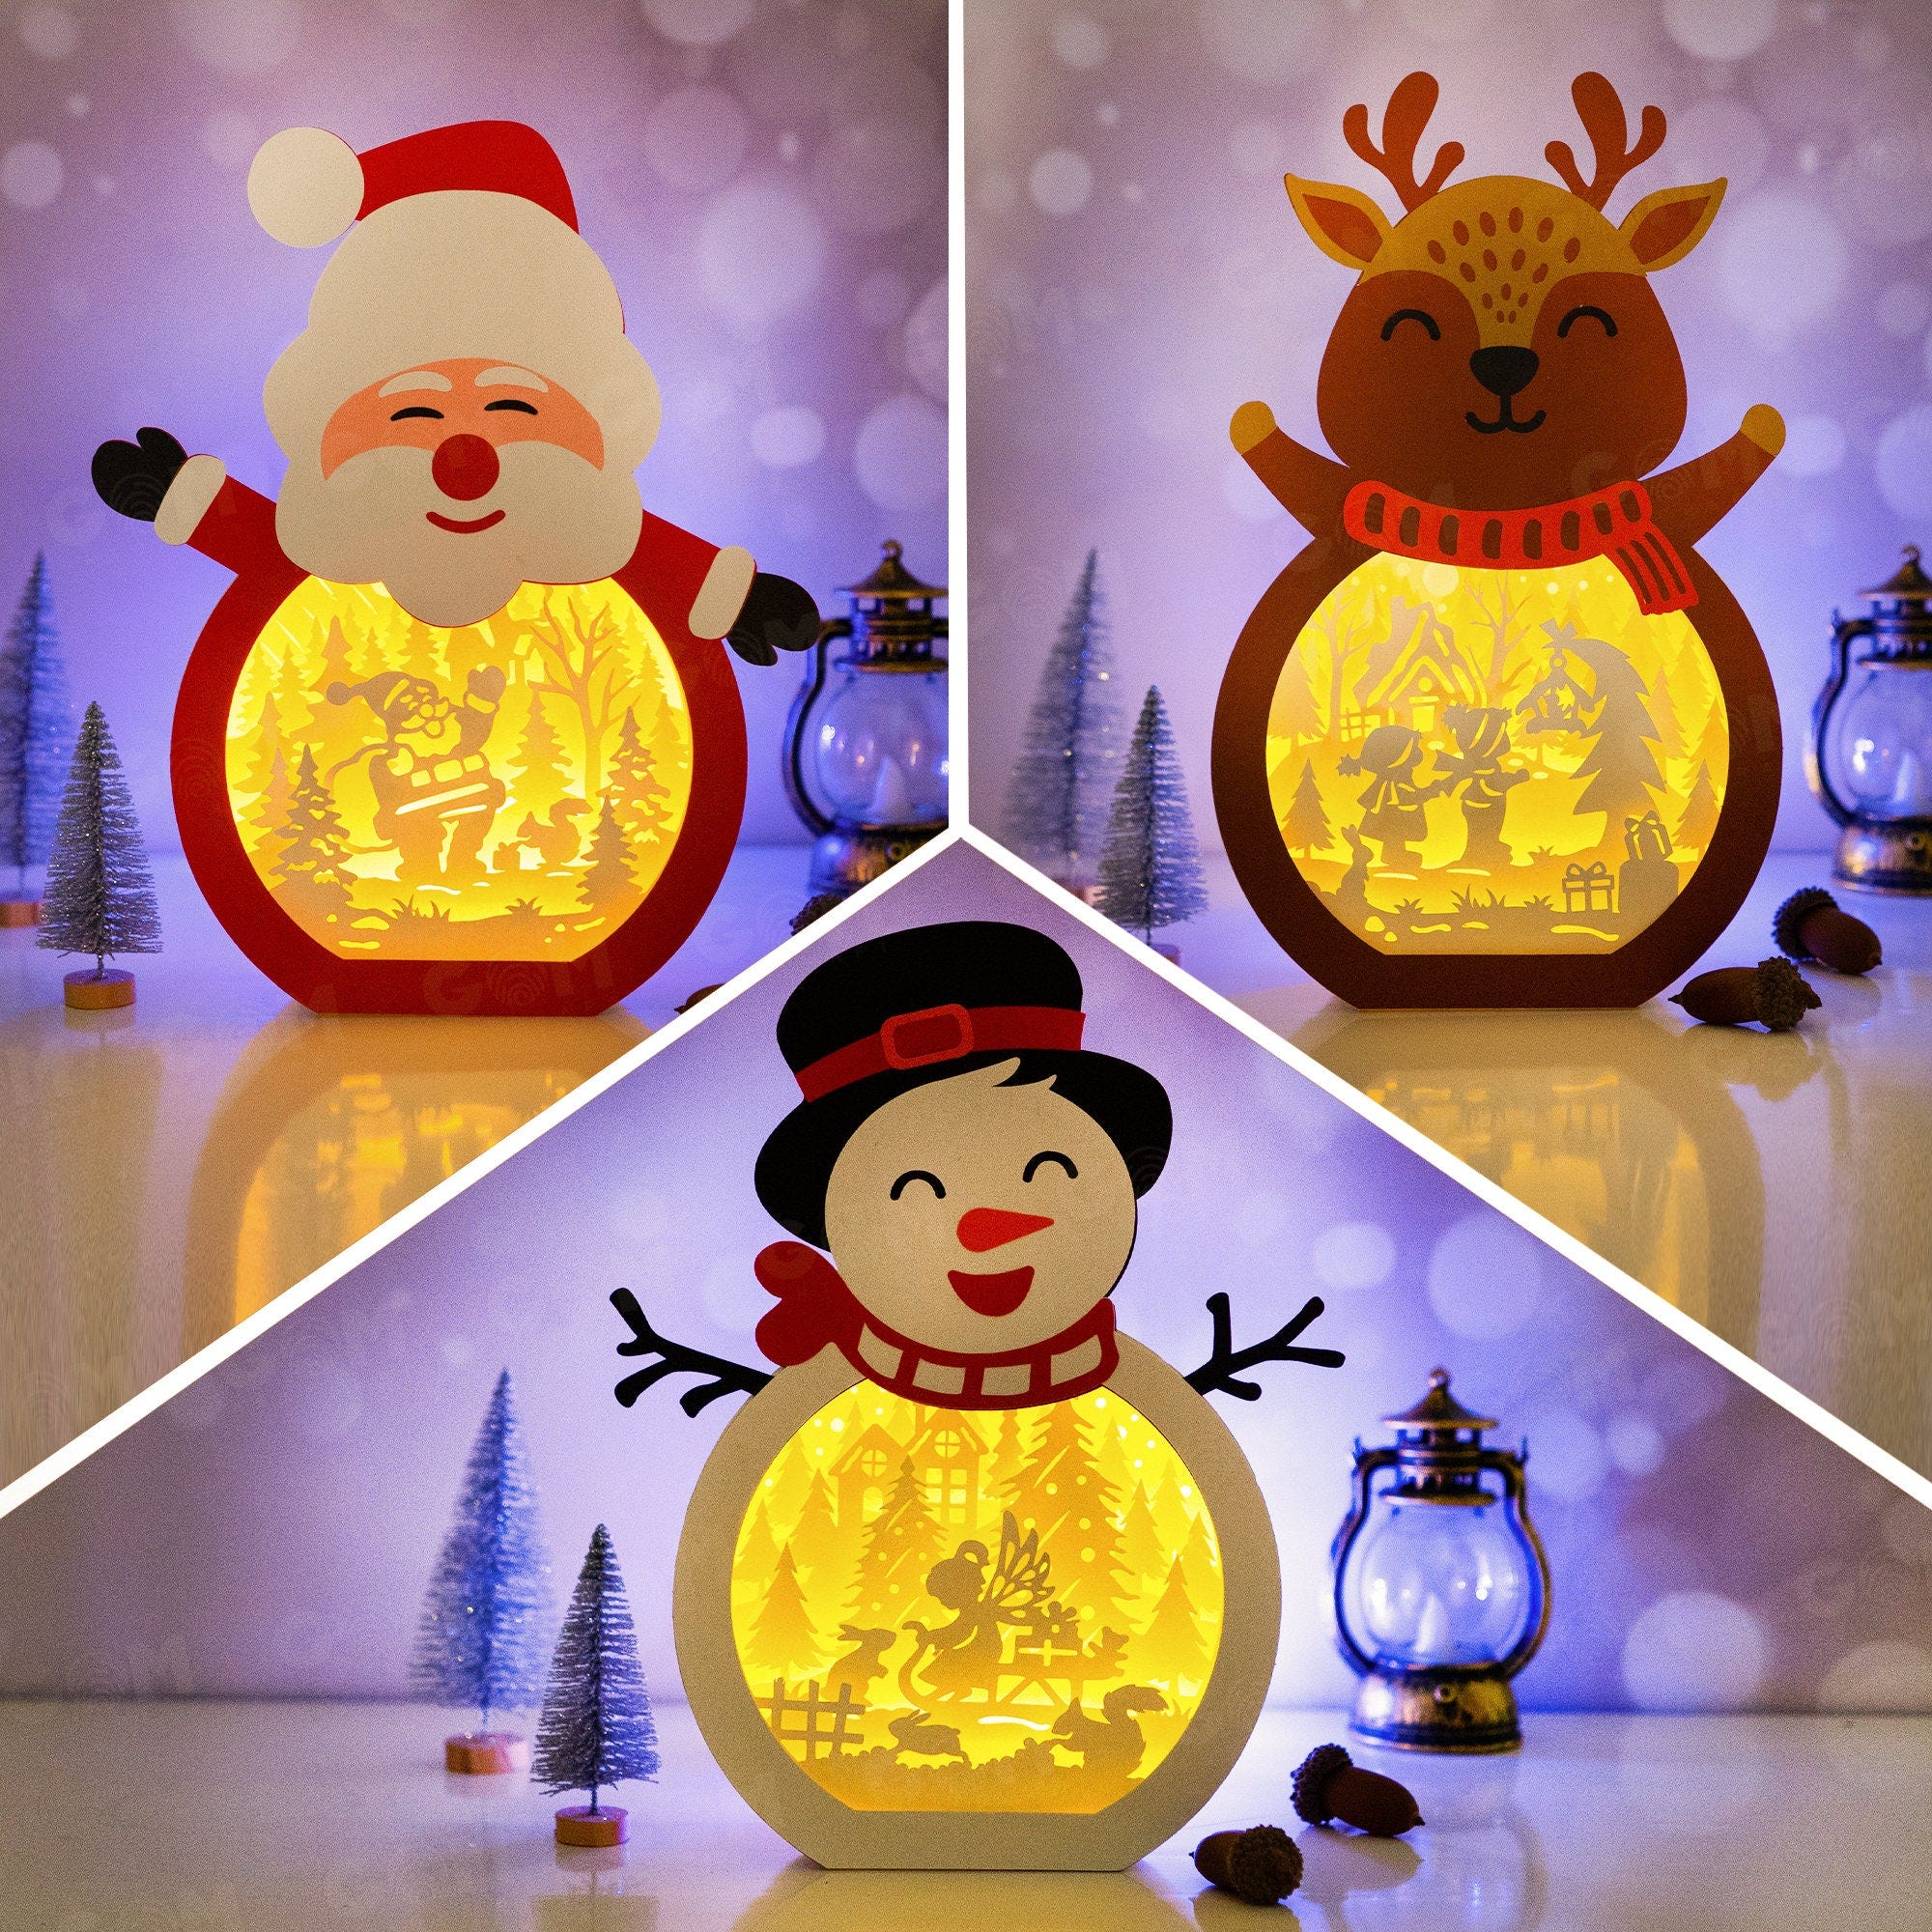 Combo 3 Items Merry Christmas Shadow Box - Santa Claus, Snowman, Reindeer Shadow Box - Paper Cut Template - Light Box SVG File